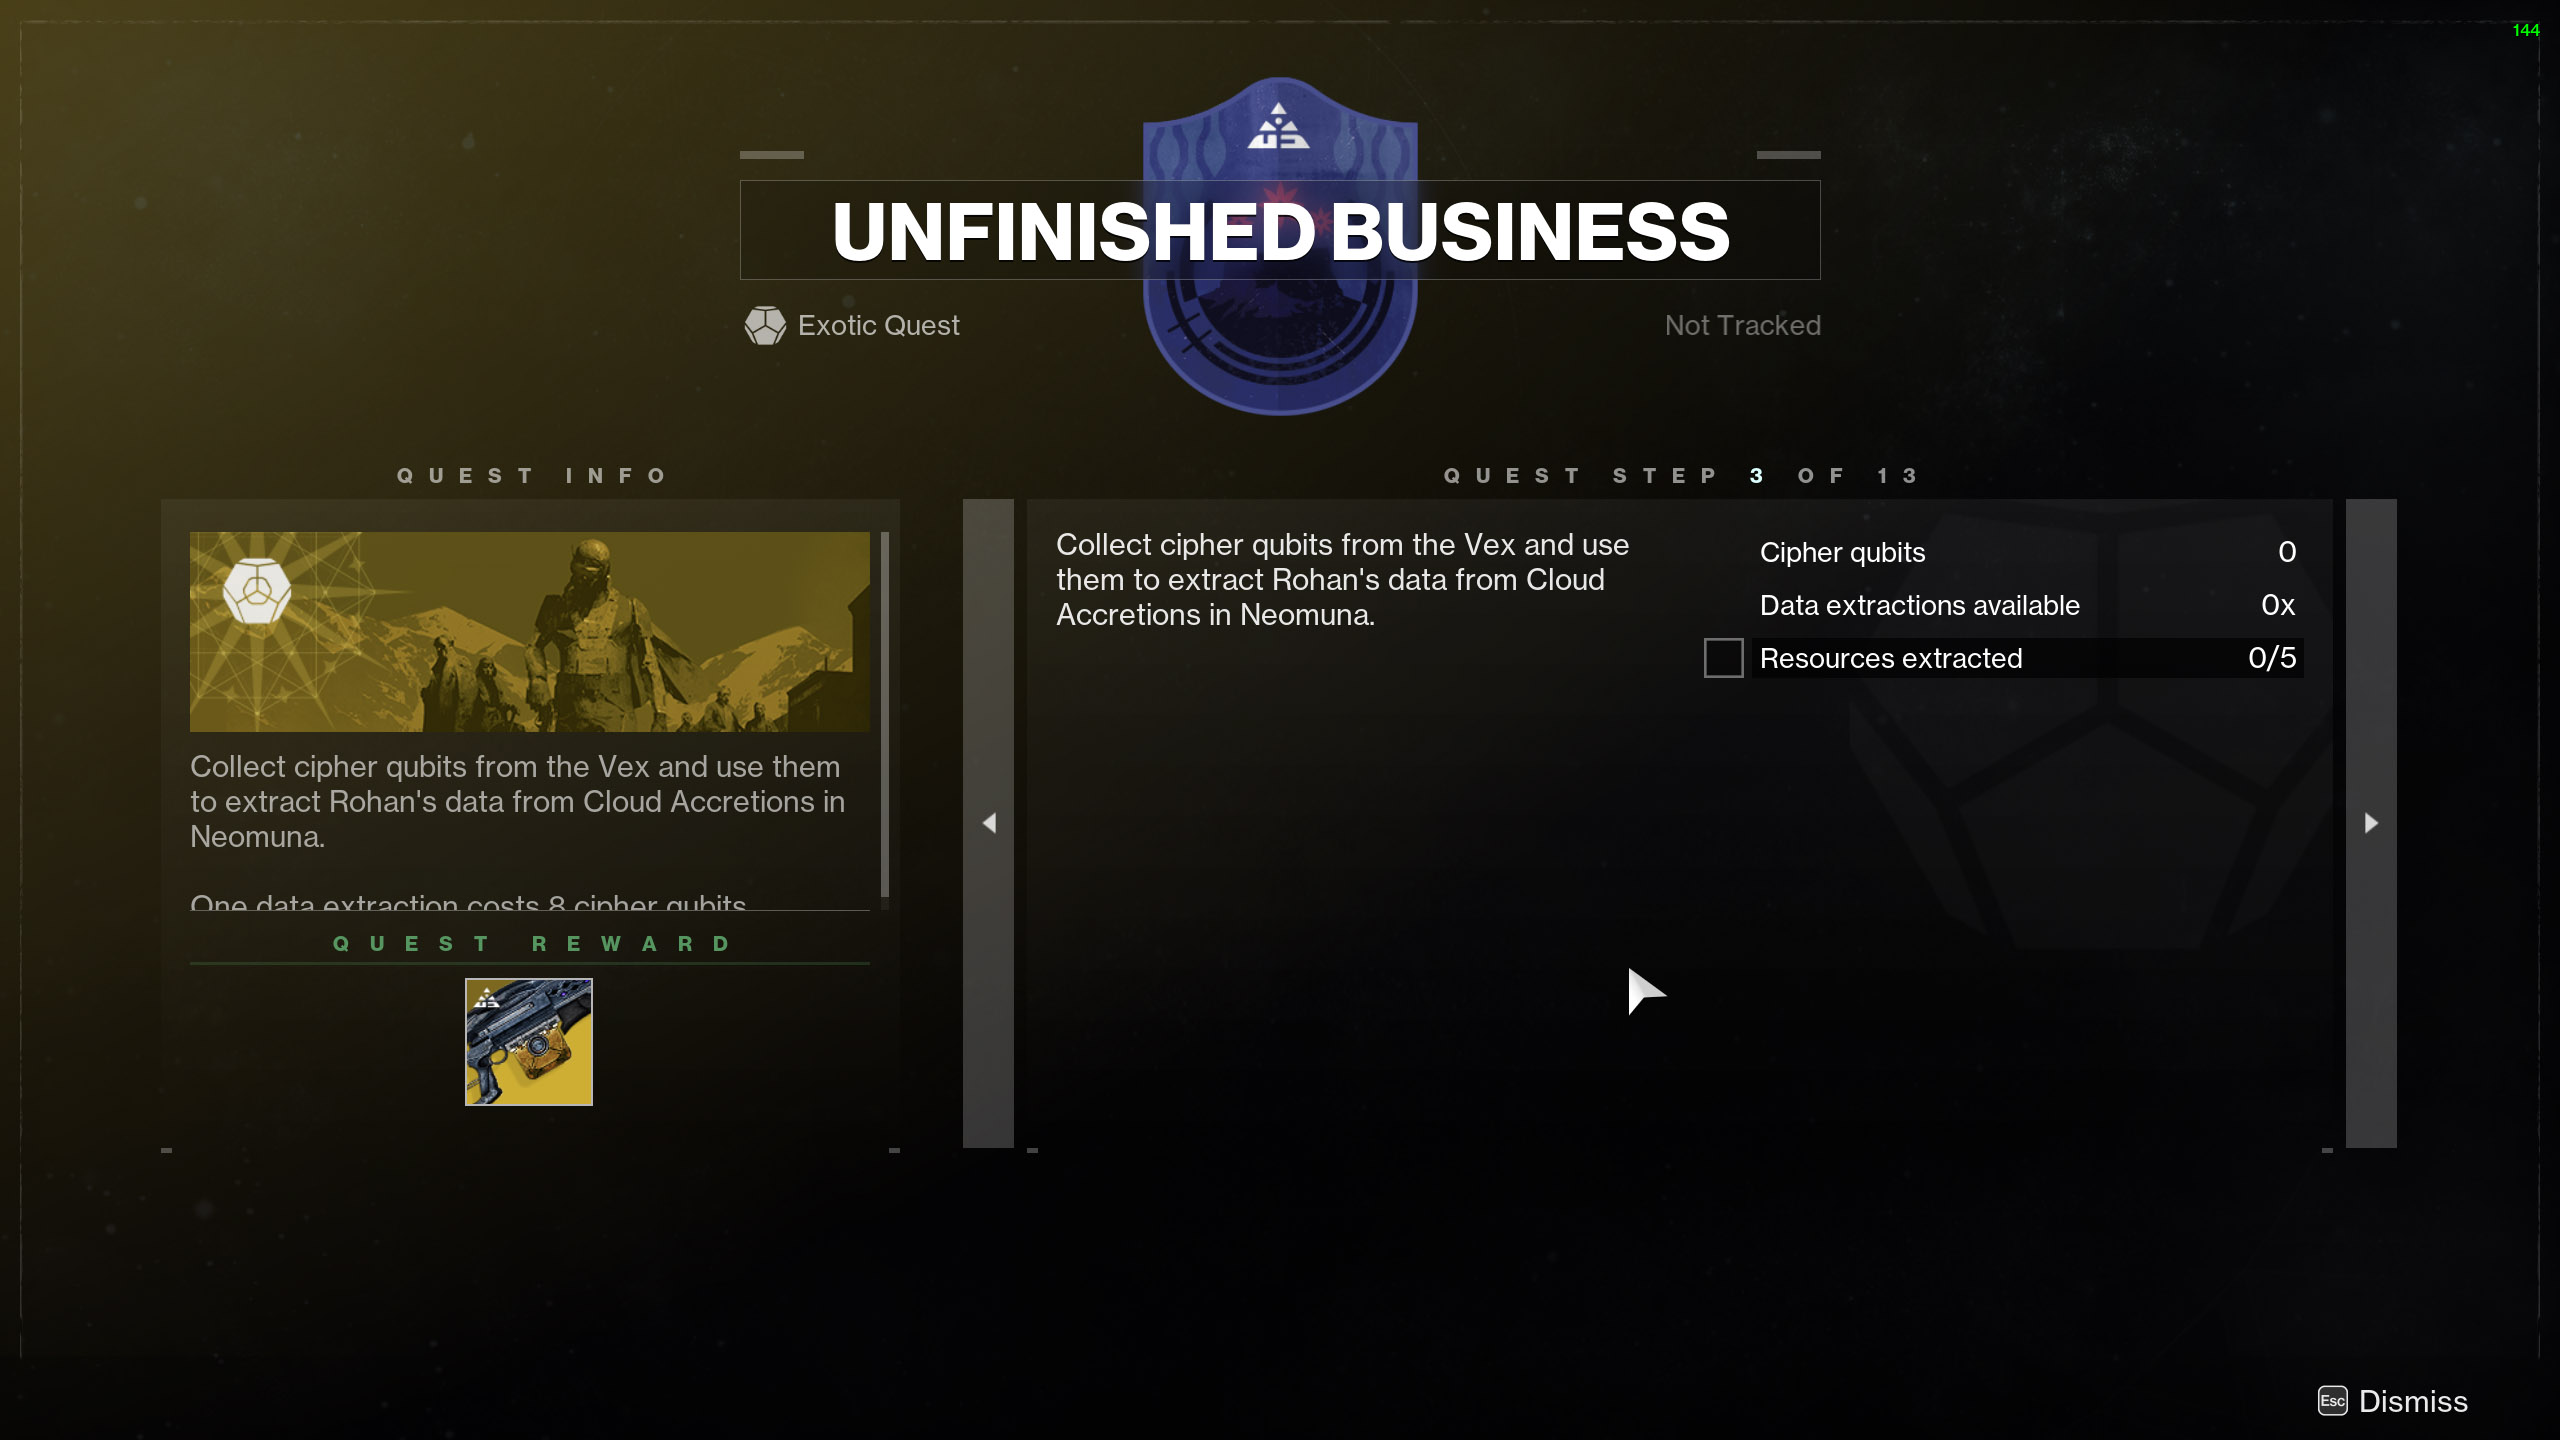 Destiny 2 Unfinished Business Step 3 